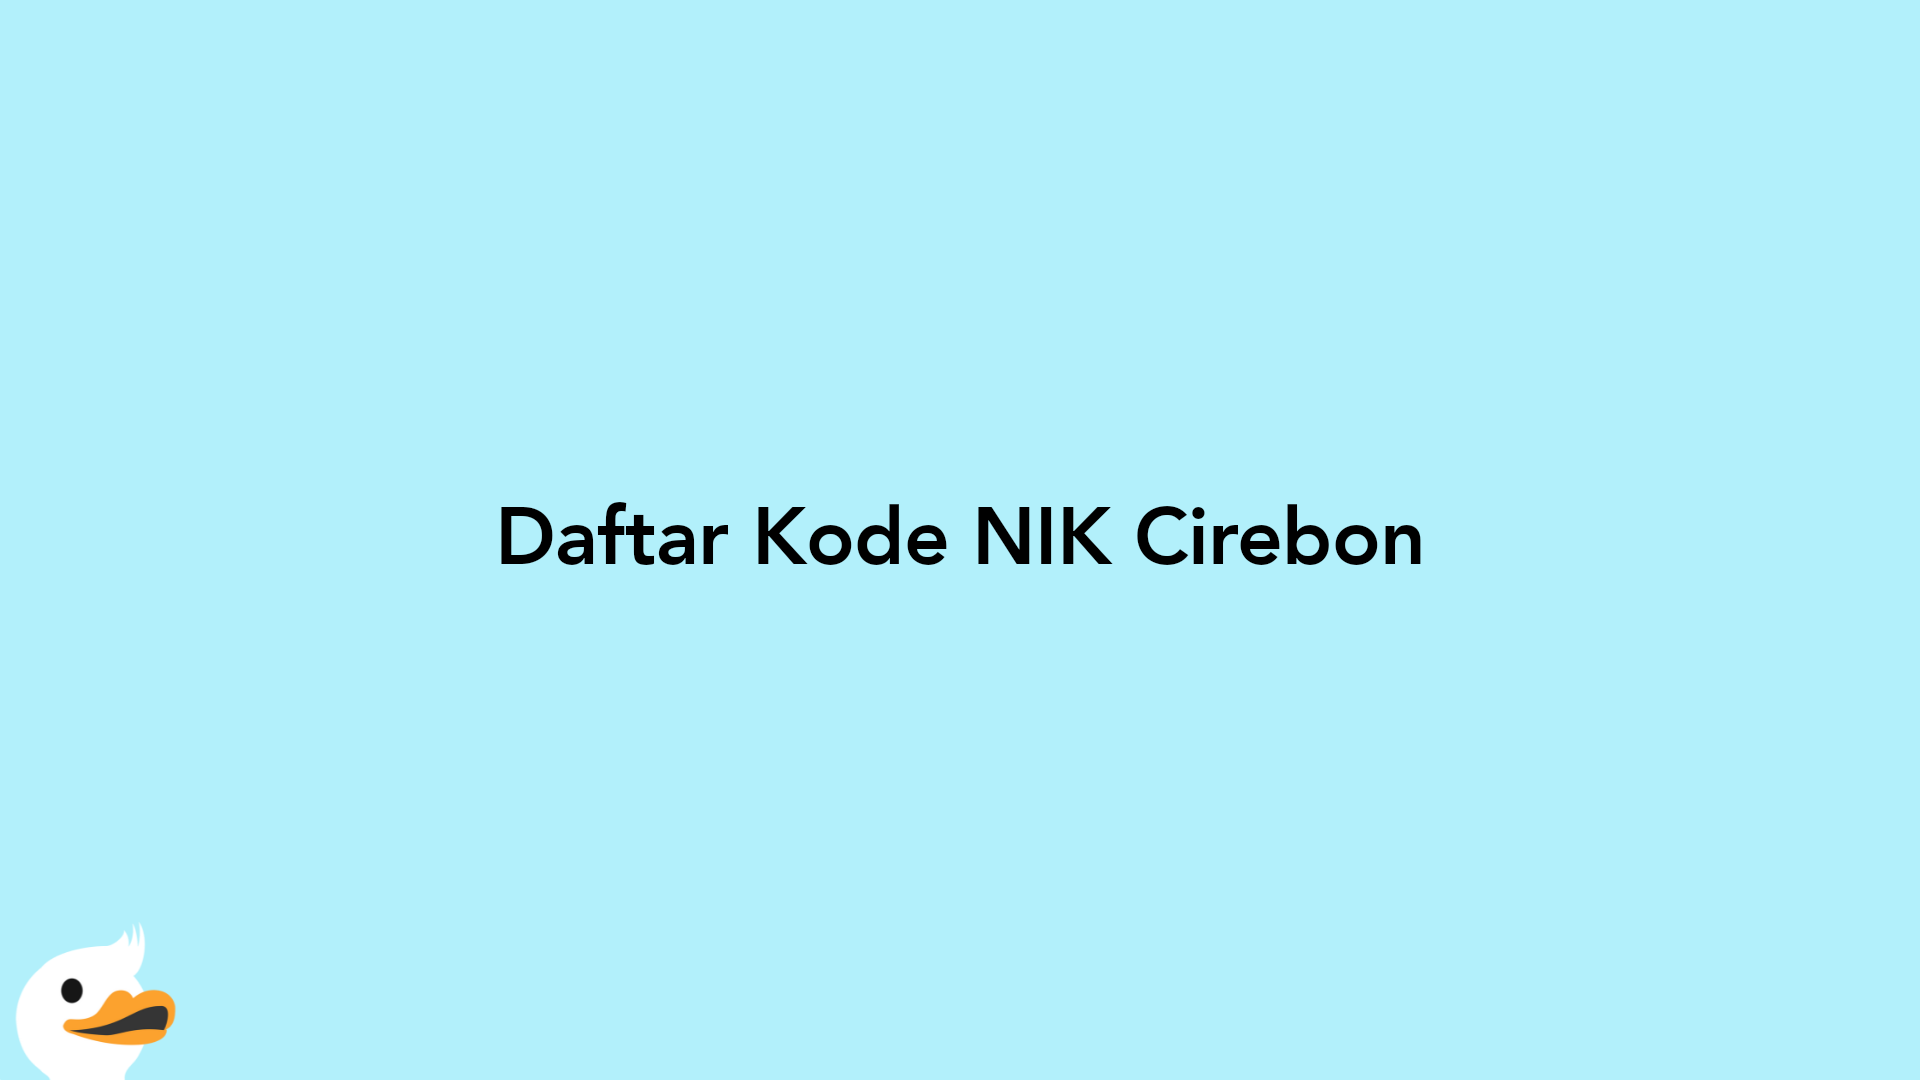 Daftar Kode NIK Cirebon